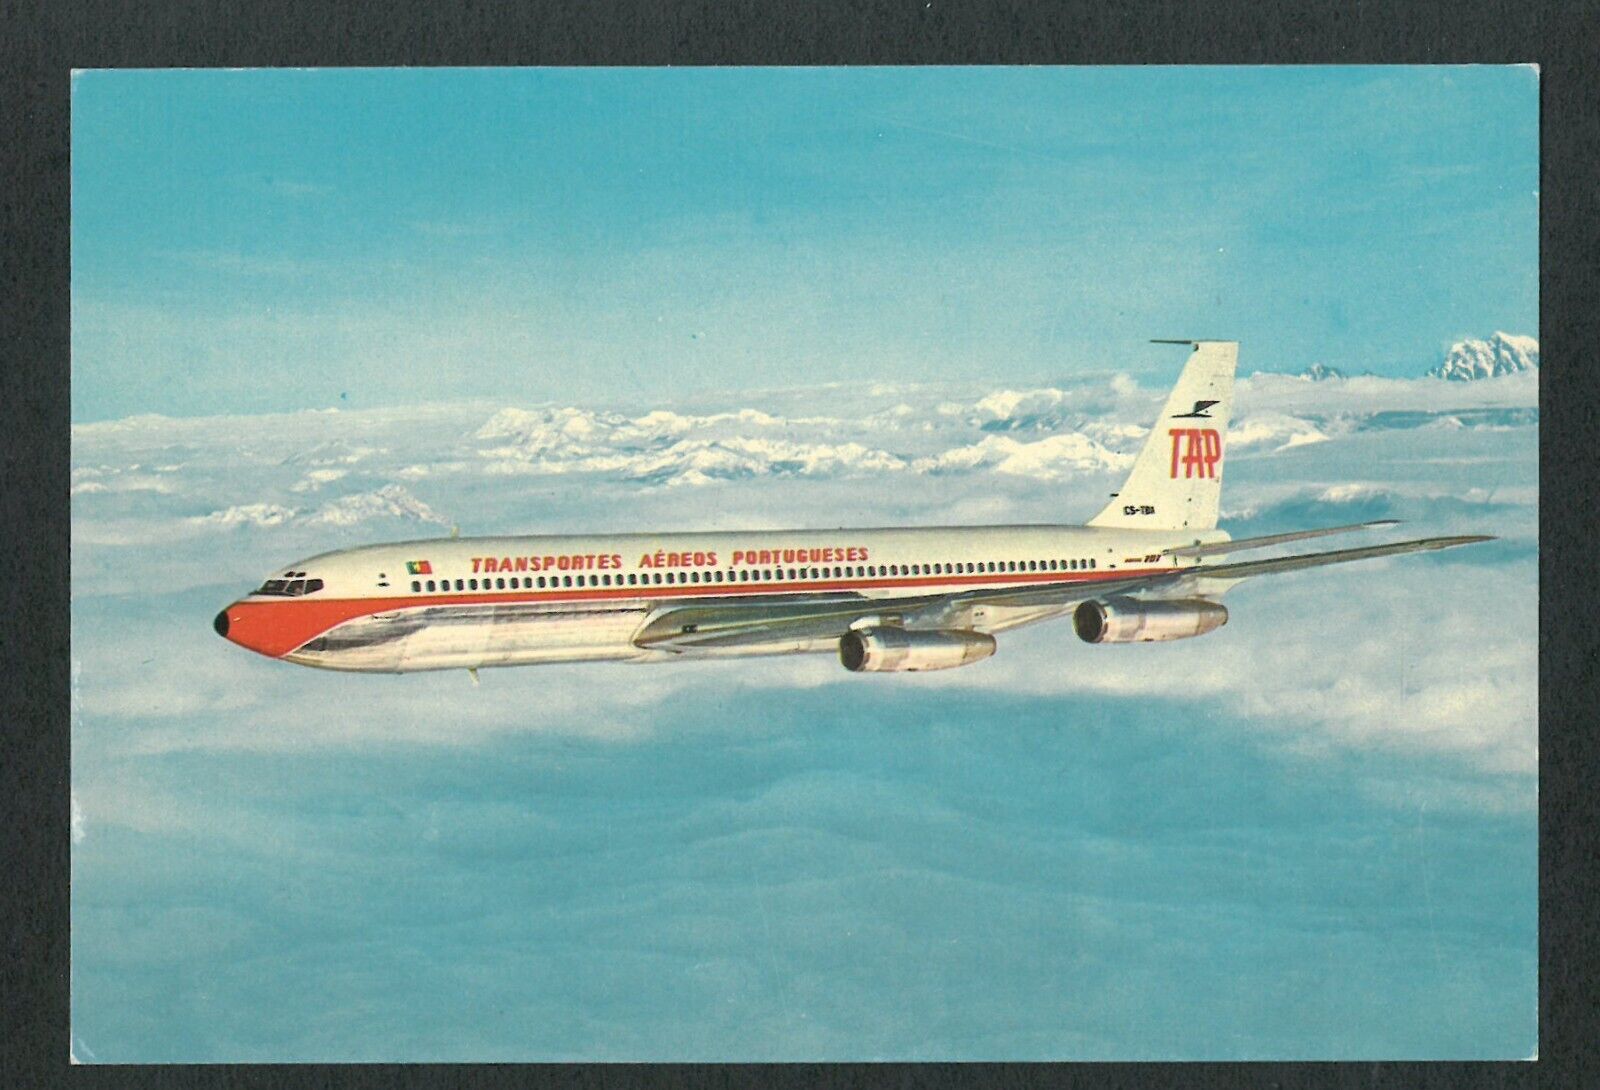 Transportes Aereos Portuguese (TAP)  Boeing 707 Postcard